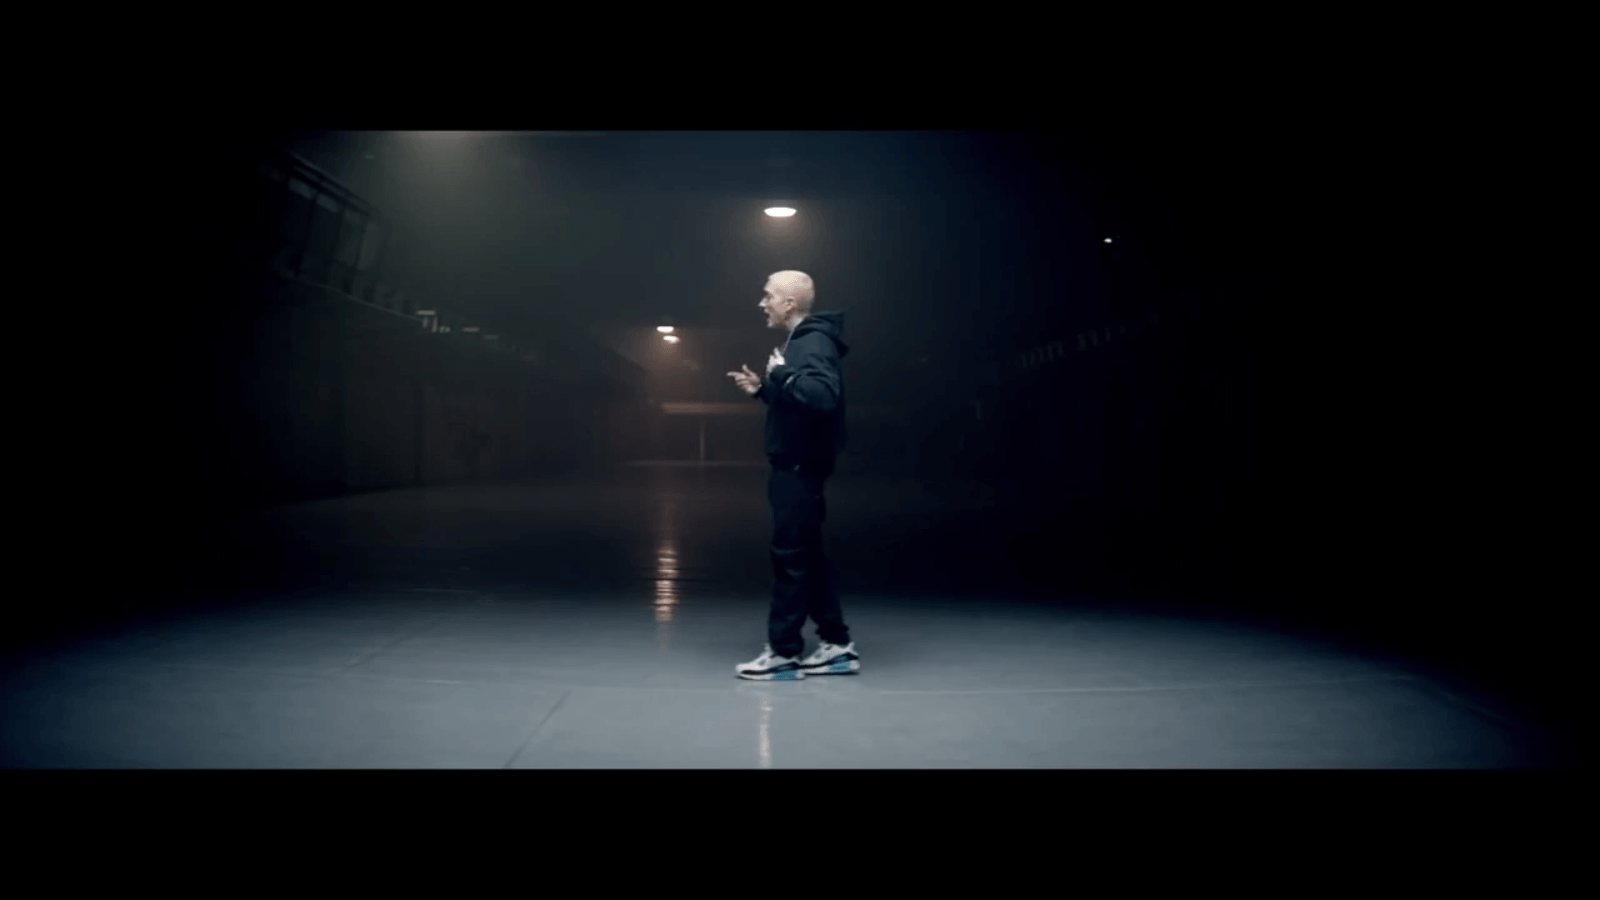 Eminem's “Rap God”: The Return of Slim Shady « Power of Deception